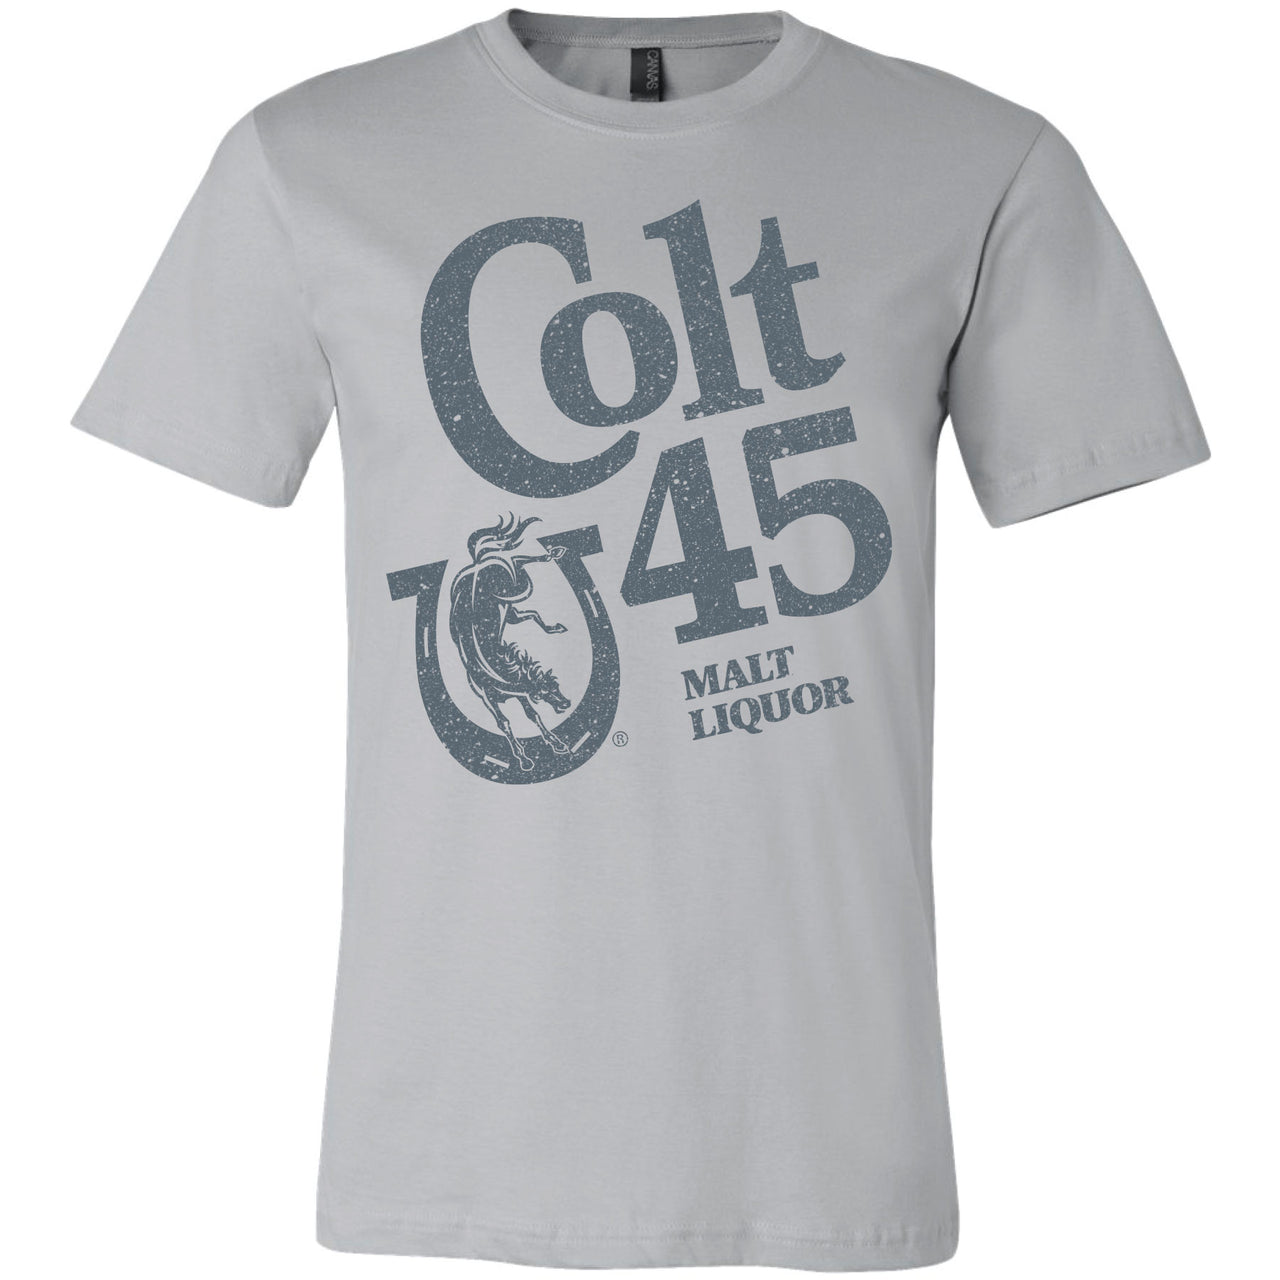 Colt 45 - Malt Liquor T-shirt